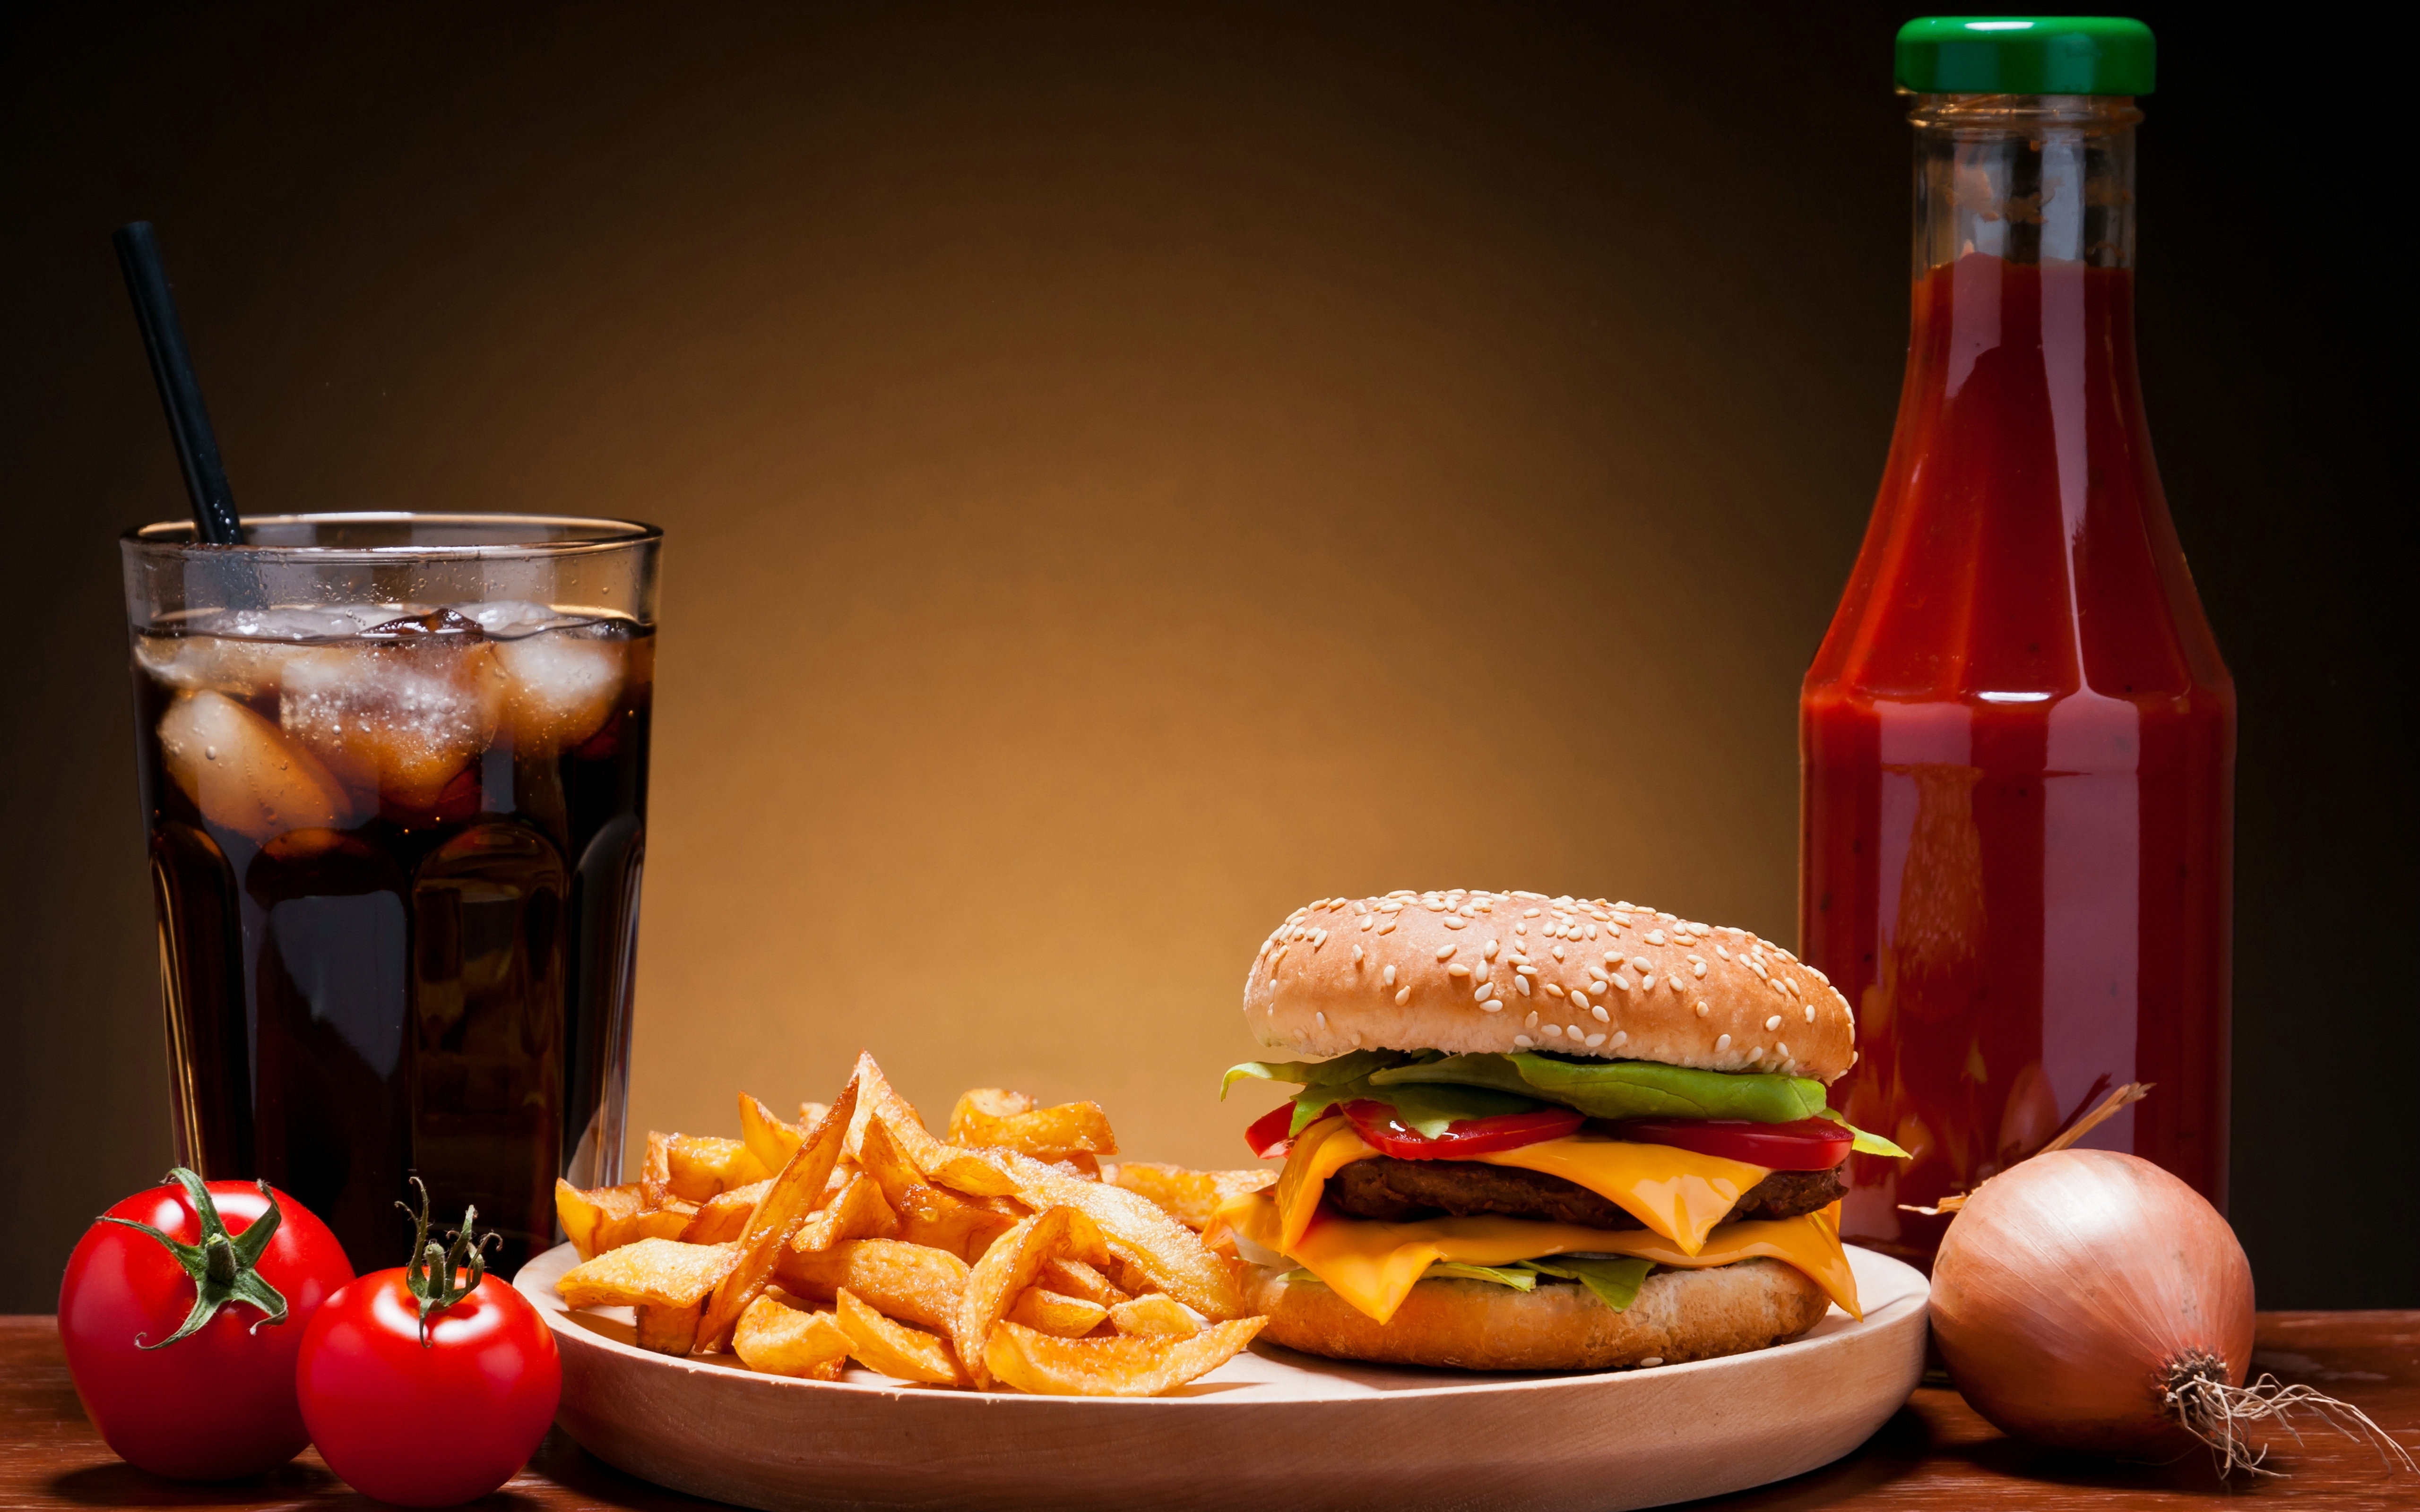 food wallpaper hd,junk food,food,hamburger,fast food,cheeseburger